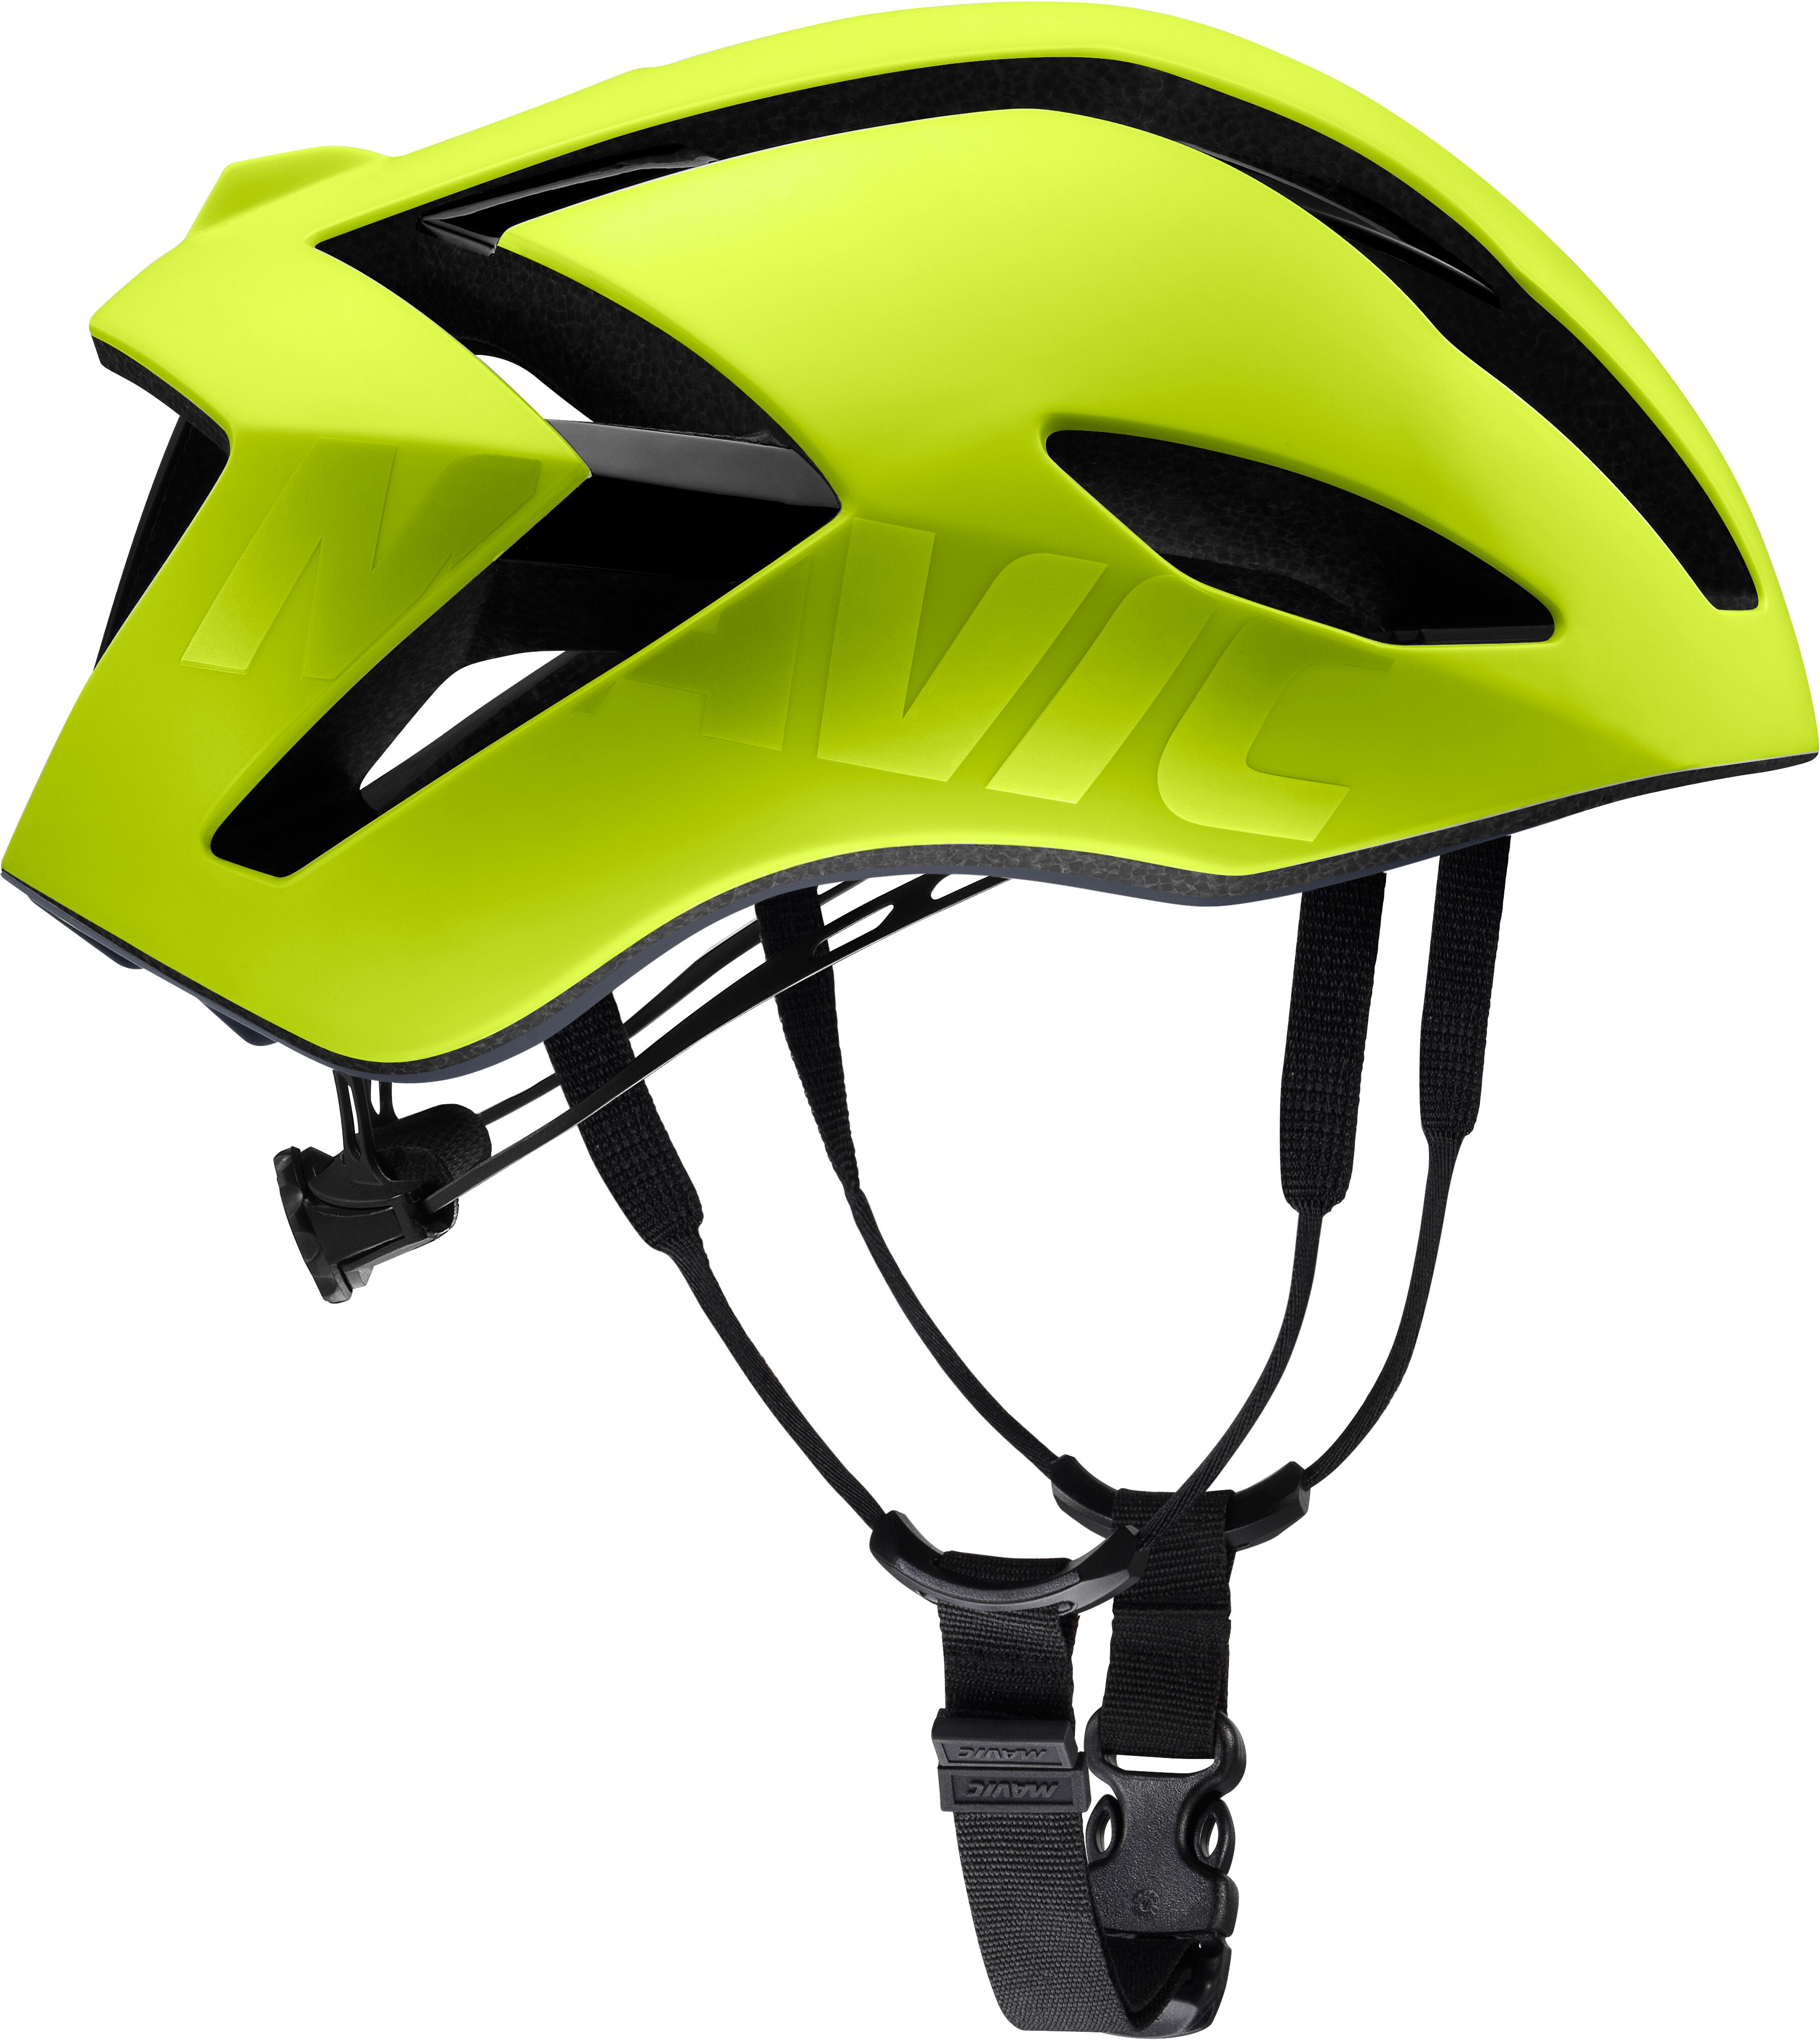 Mavic Comete Ultimate MIPS - Road bike helmet